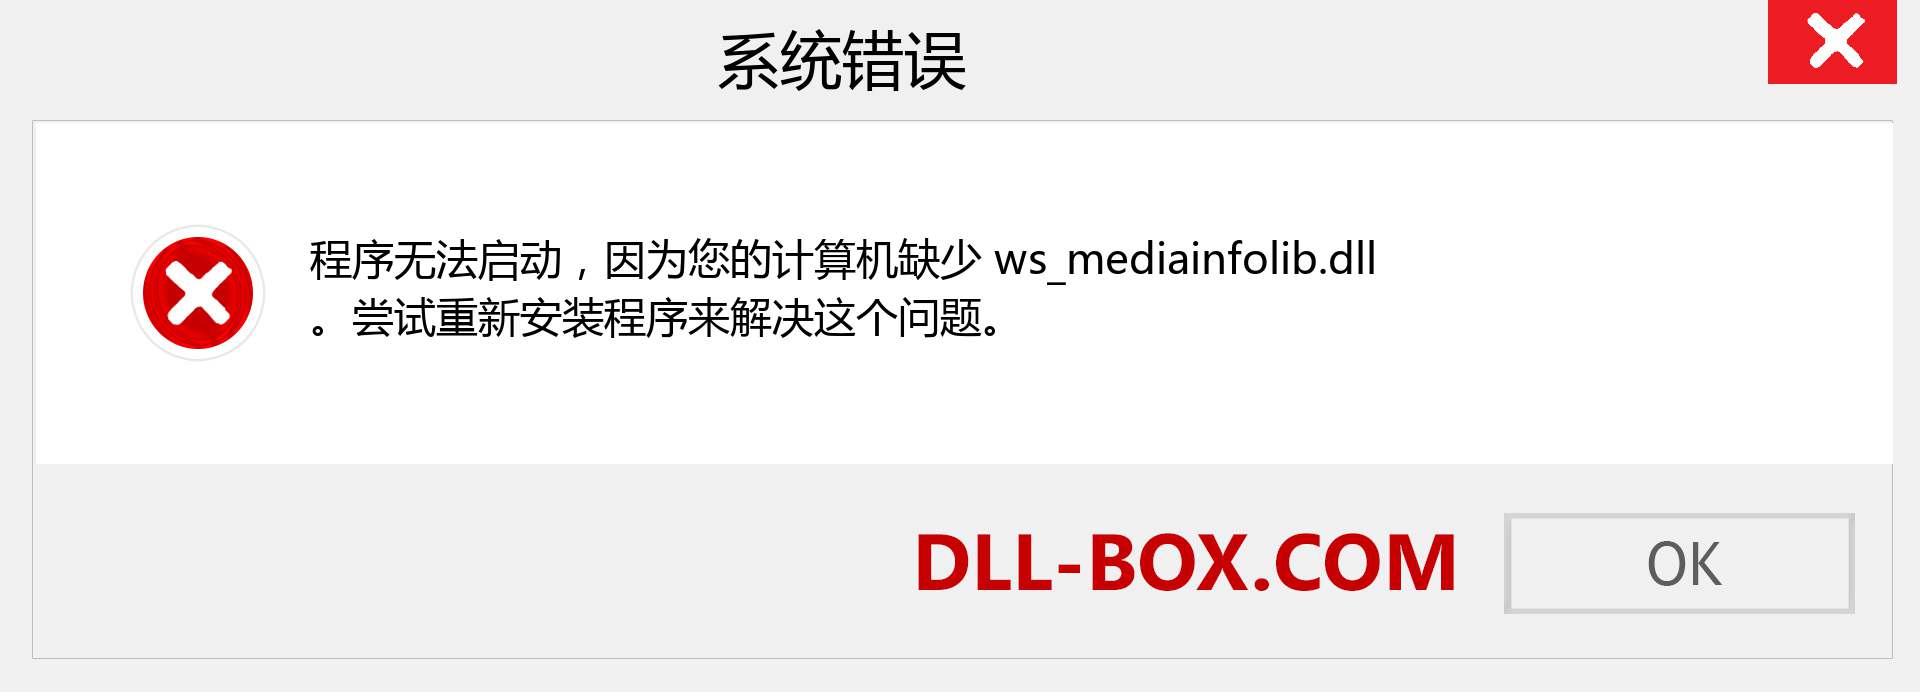 ws_mediainfolib.dll 文件丢失？。 适用于 Windows 7、8、10 的下载 - 修复 Windows、照片、图像上的 ws_mediainfolib dll 丢失错误